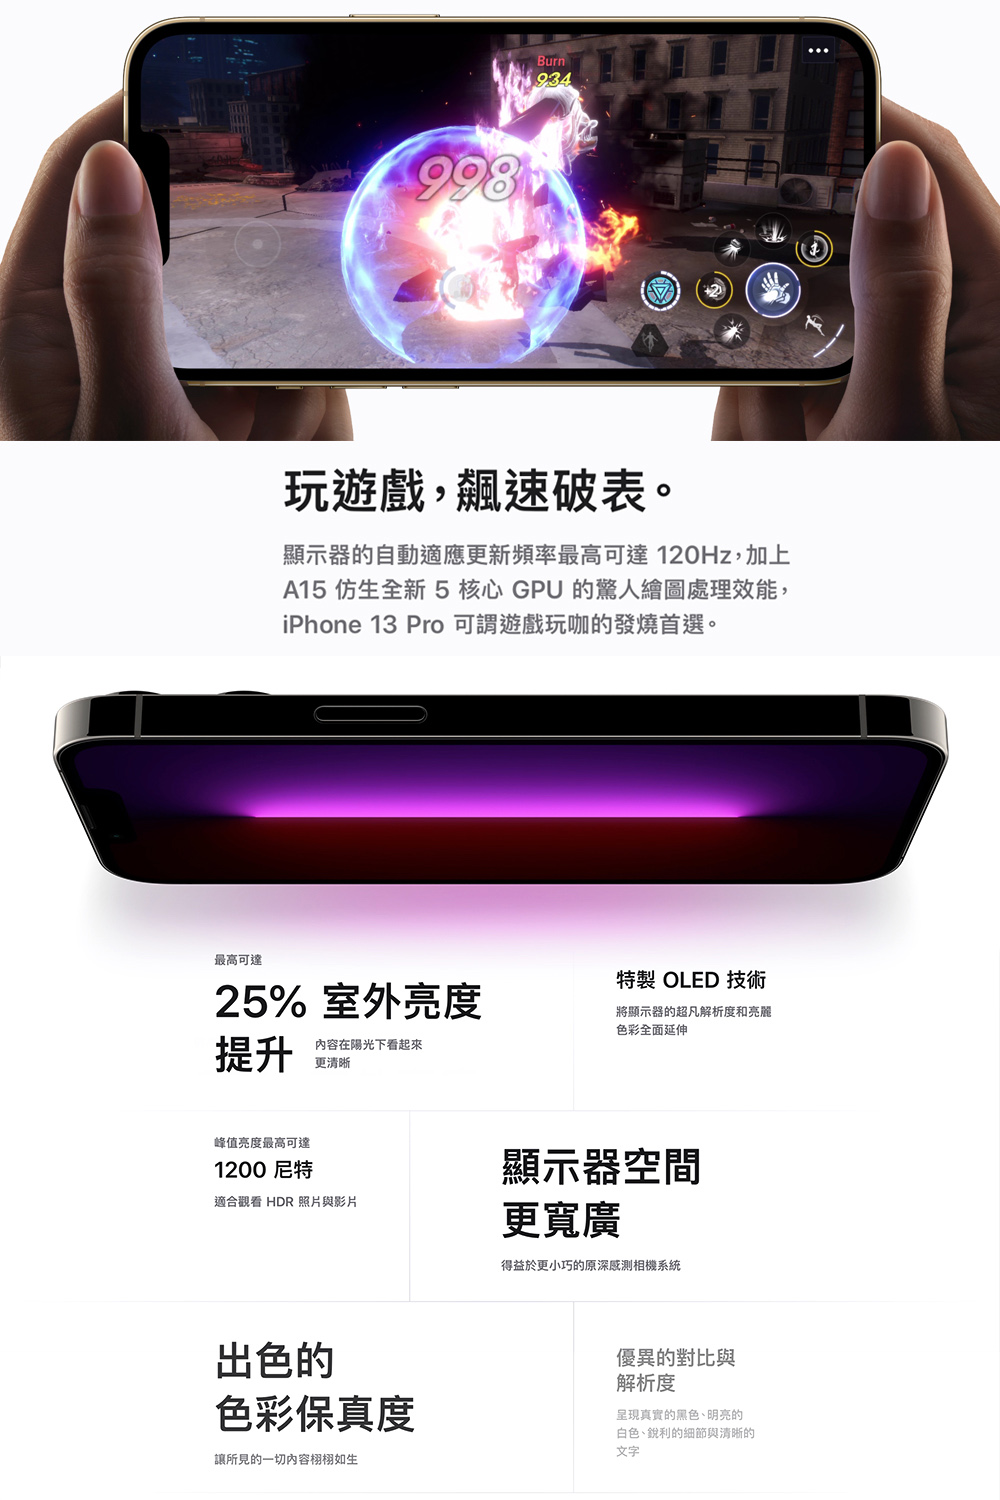 (A級福利品)【Apple】iPhone13 Pro Max 512G 贈殼貼組